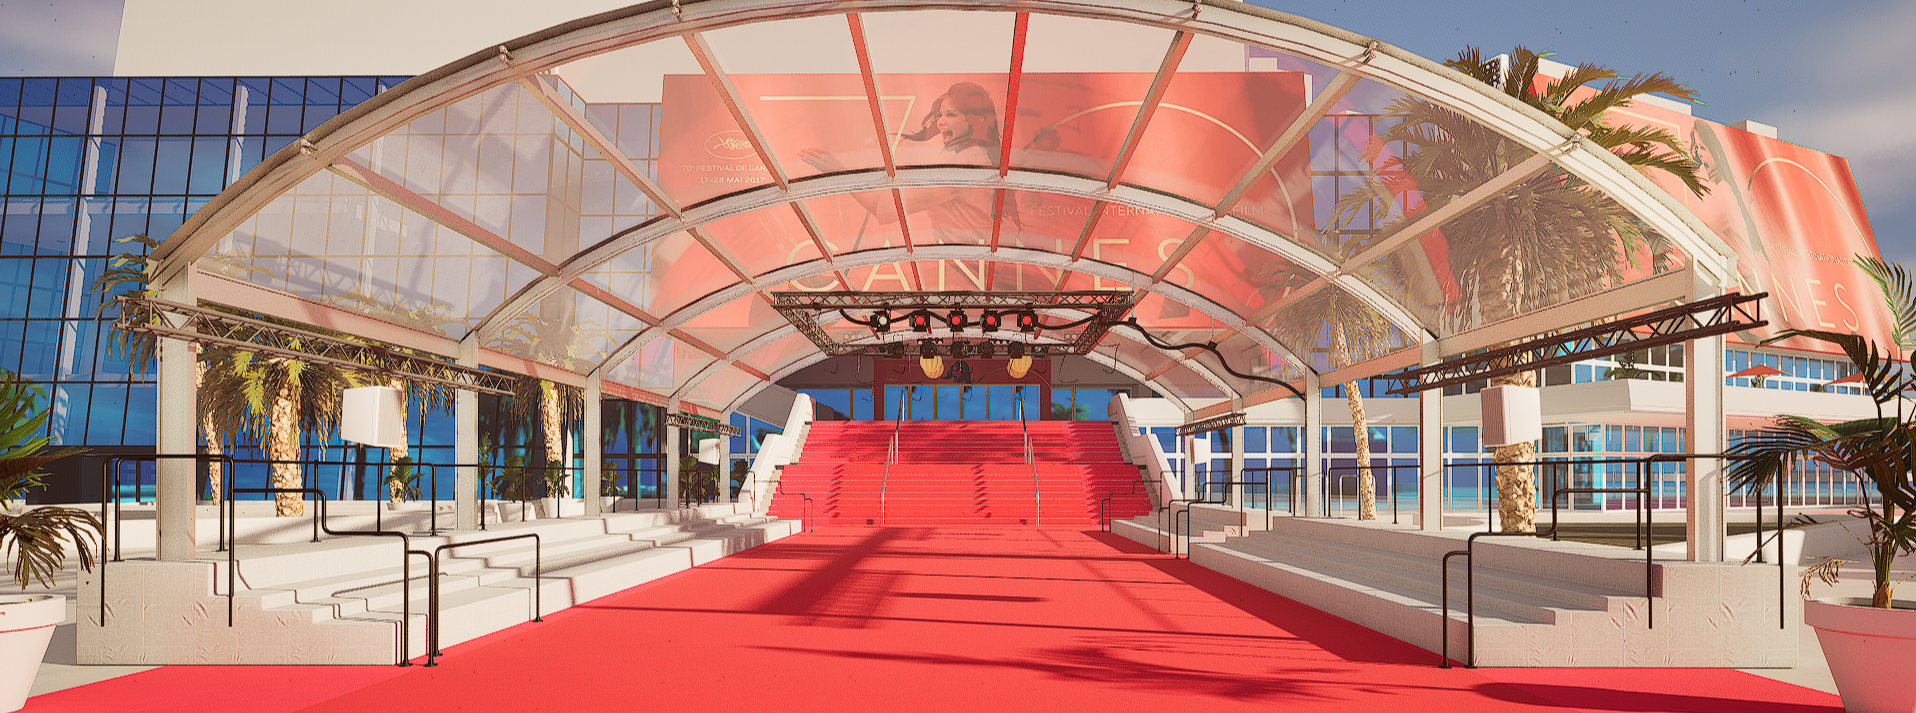 Virtual red carpet for Cannes Film Festival inside Moshpit